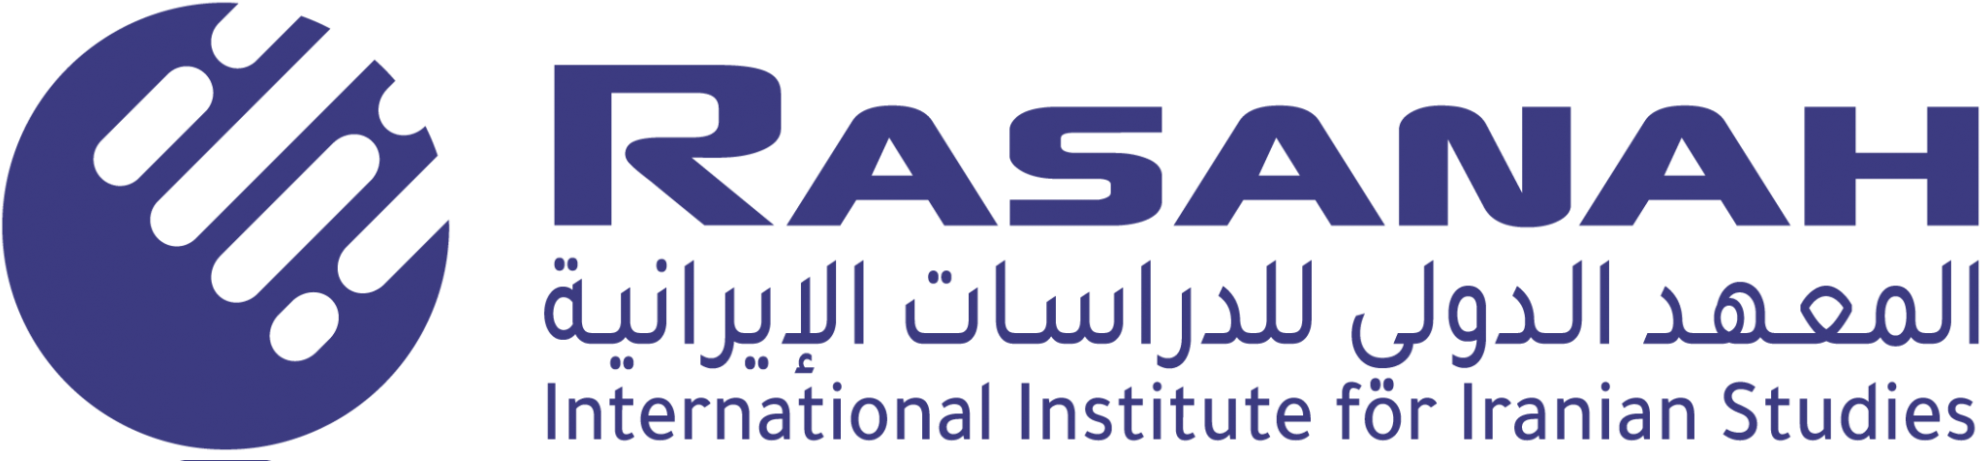 International Institute For Iranian Studies - Oval (2000x469)